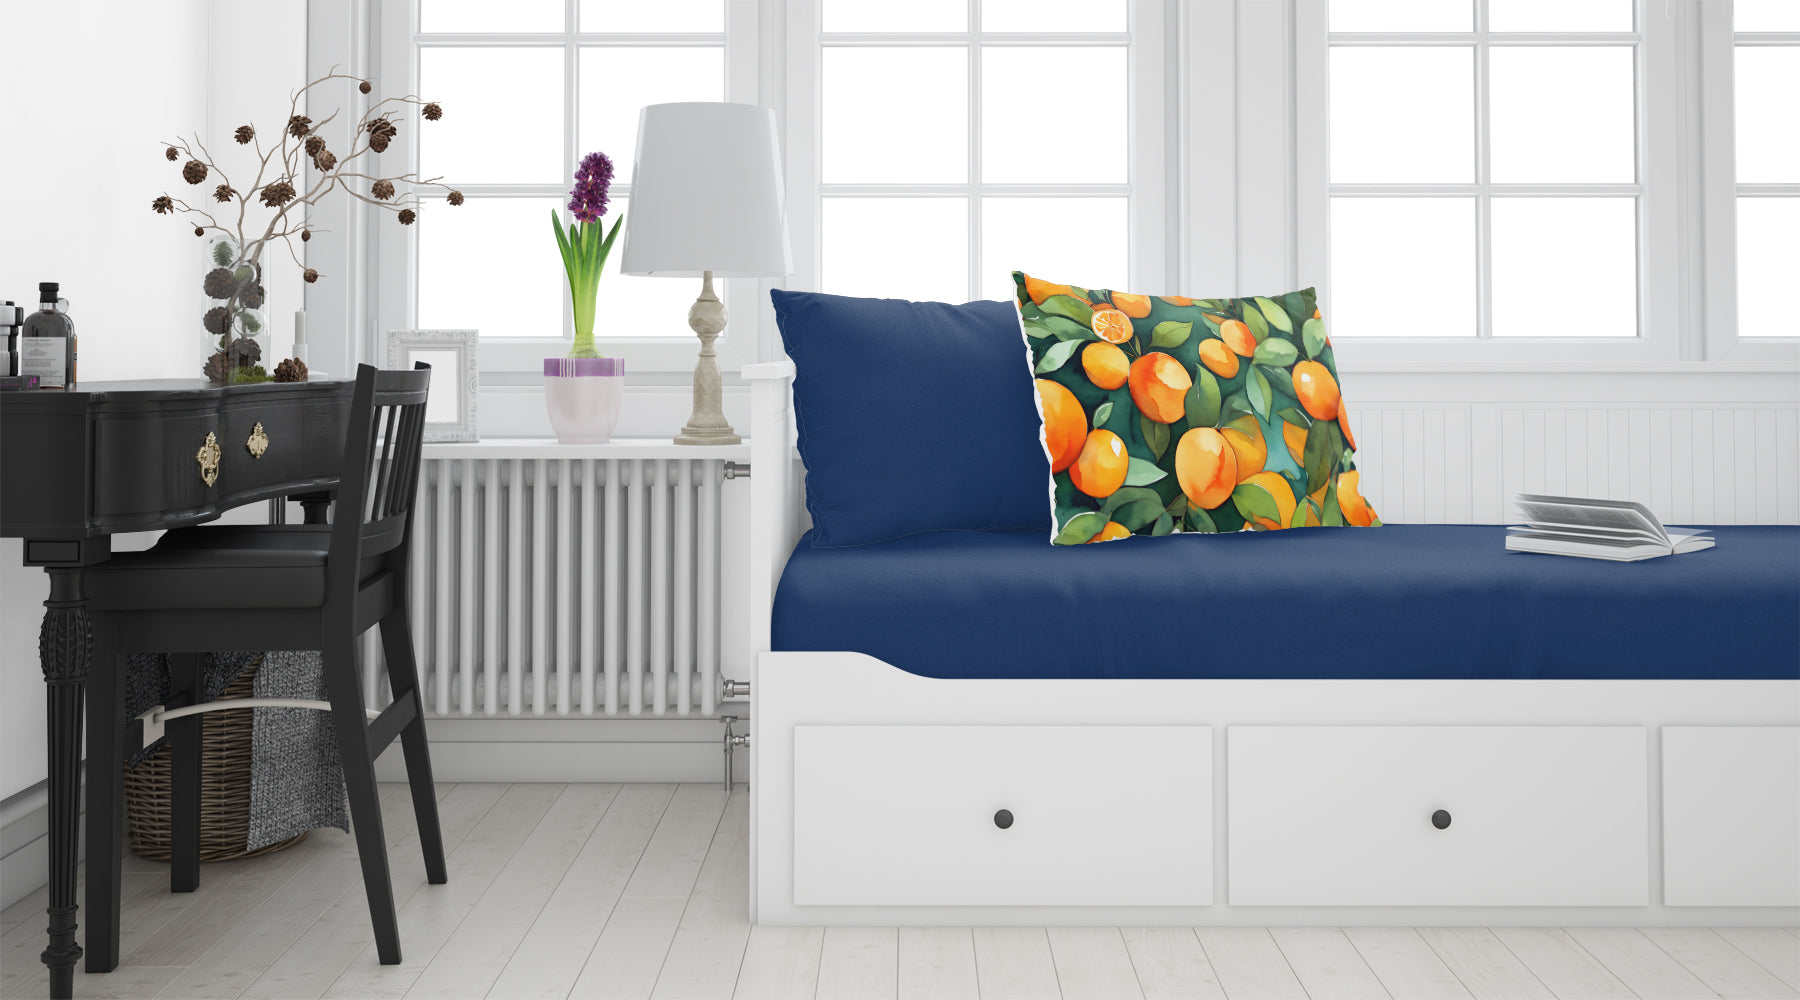 Buy this Florida Orange Blossom in Watercolor Fabric Standard Pillowcase